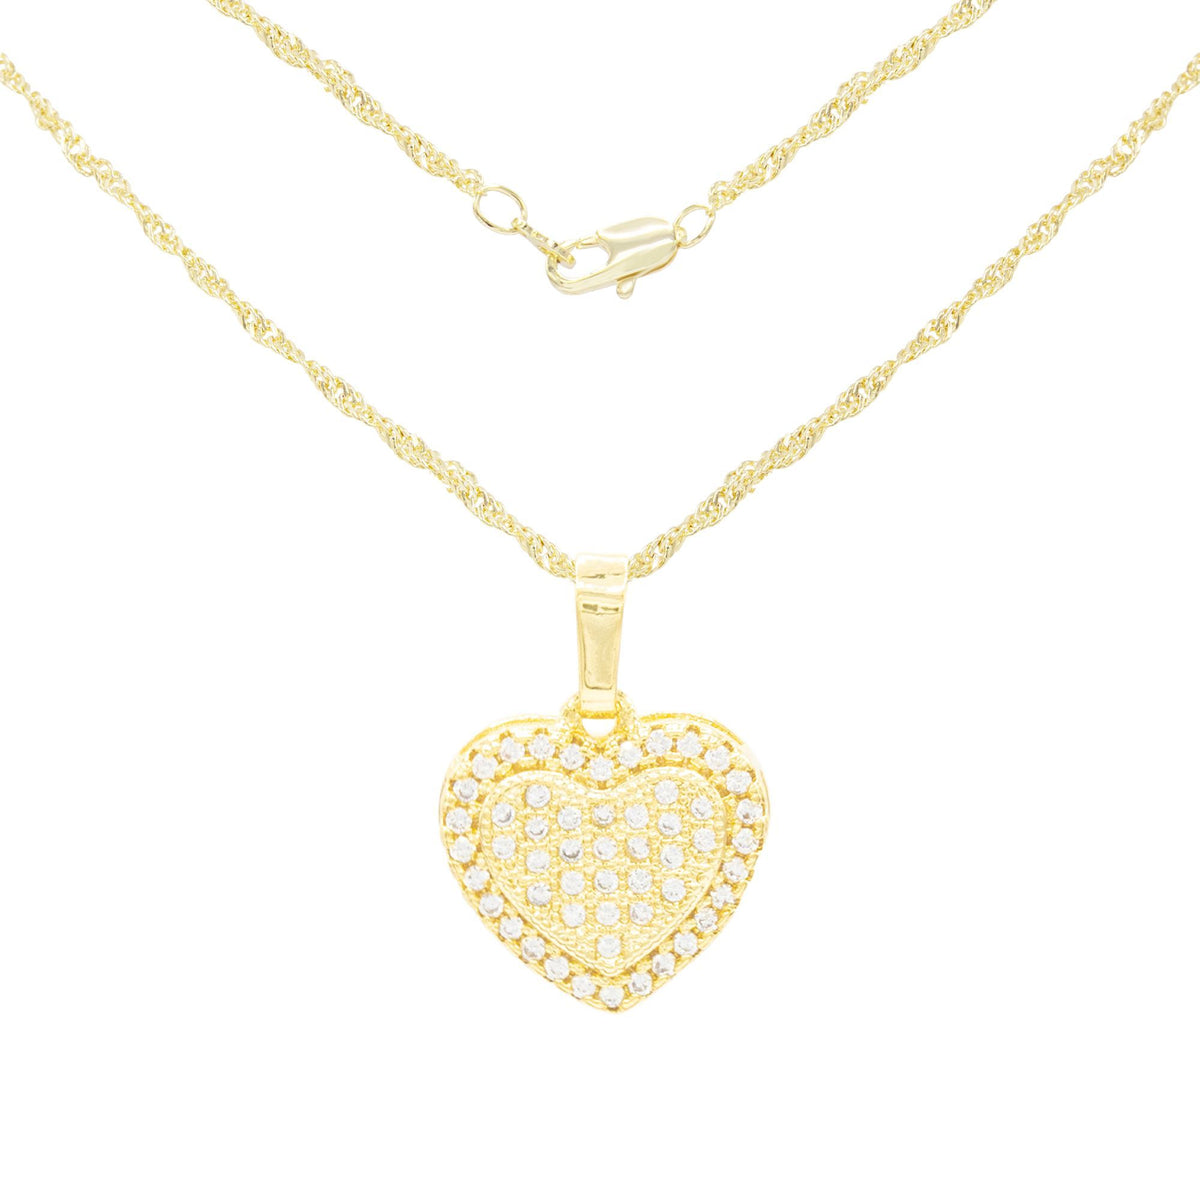 BEBERLINI CZ Heart Pendant 14K Gold Filled Charm Necklace Set